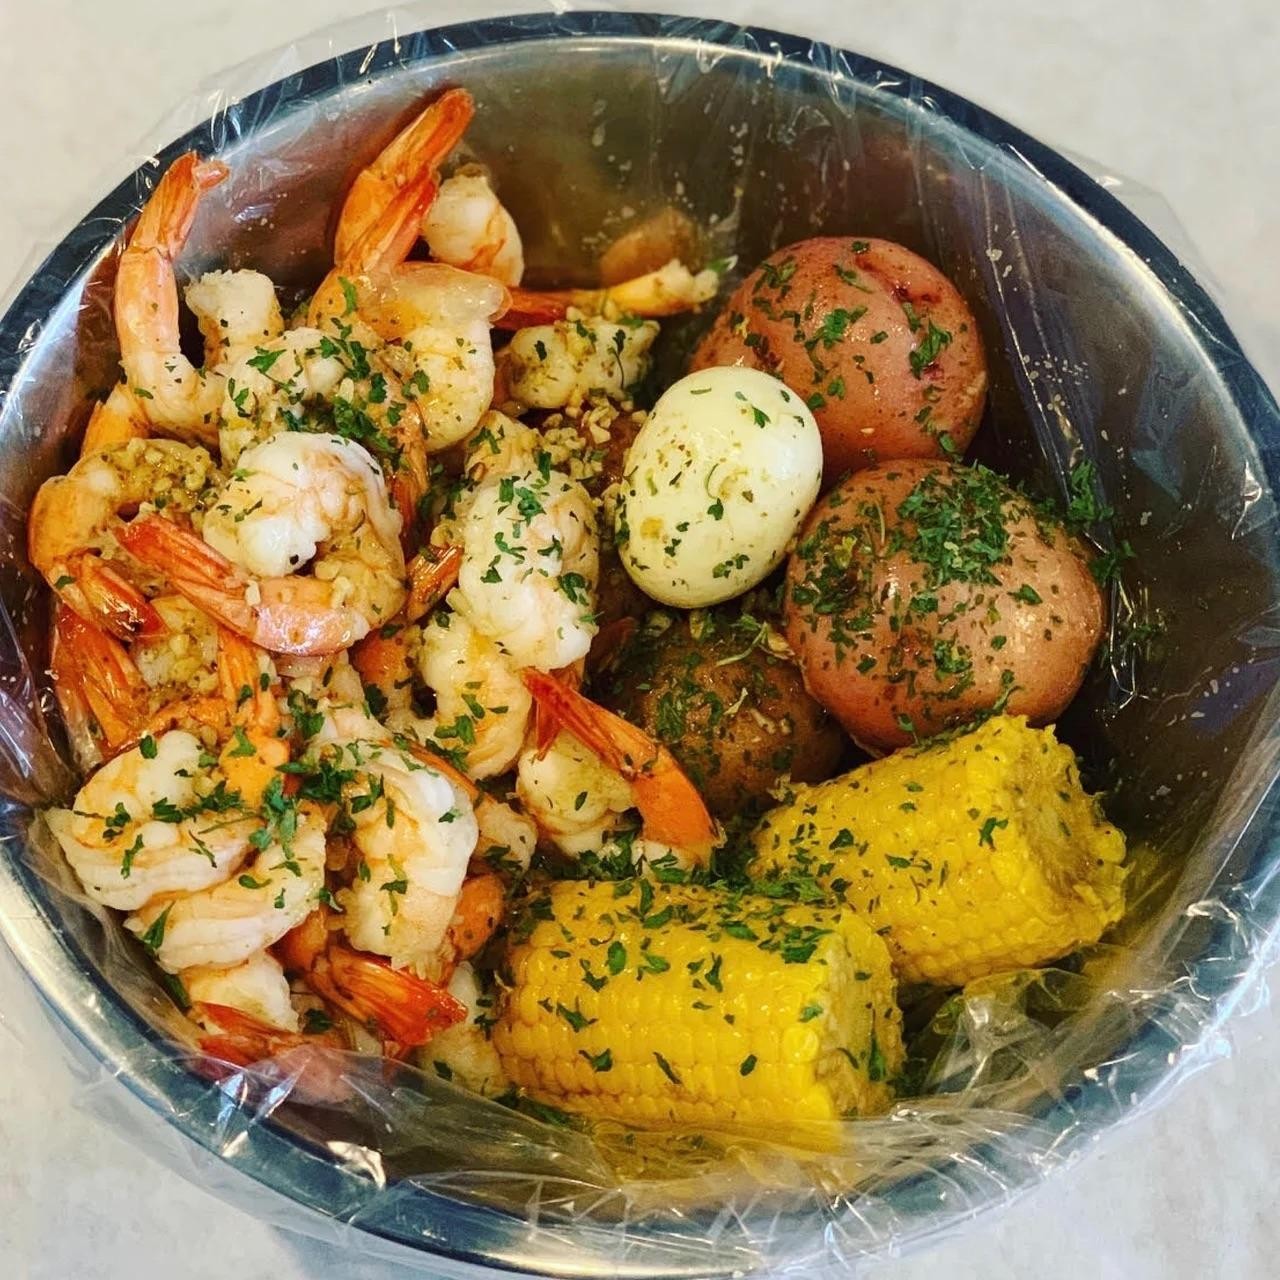 Shrimp Lovers Plate - 1lb shrimp, 1 corn, 1 egg and 2 potatoes